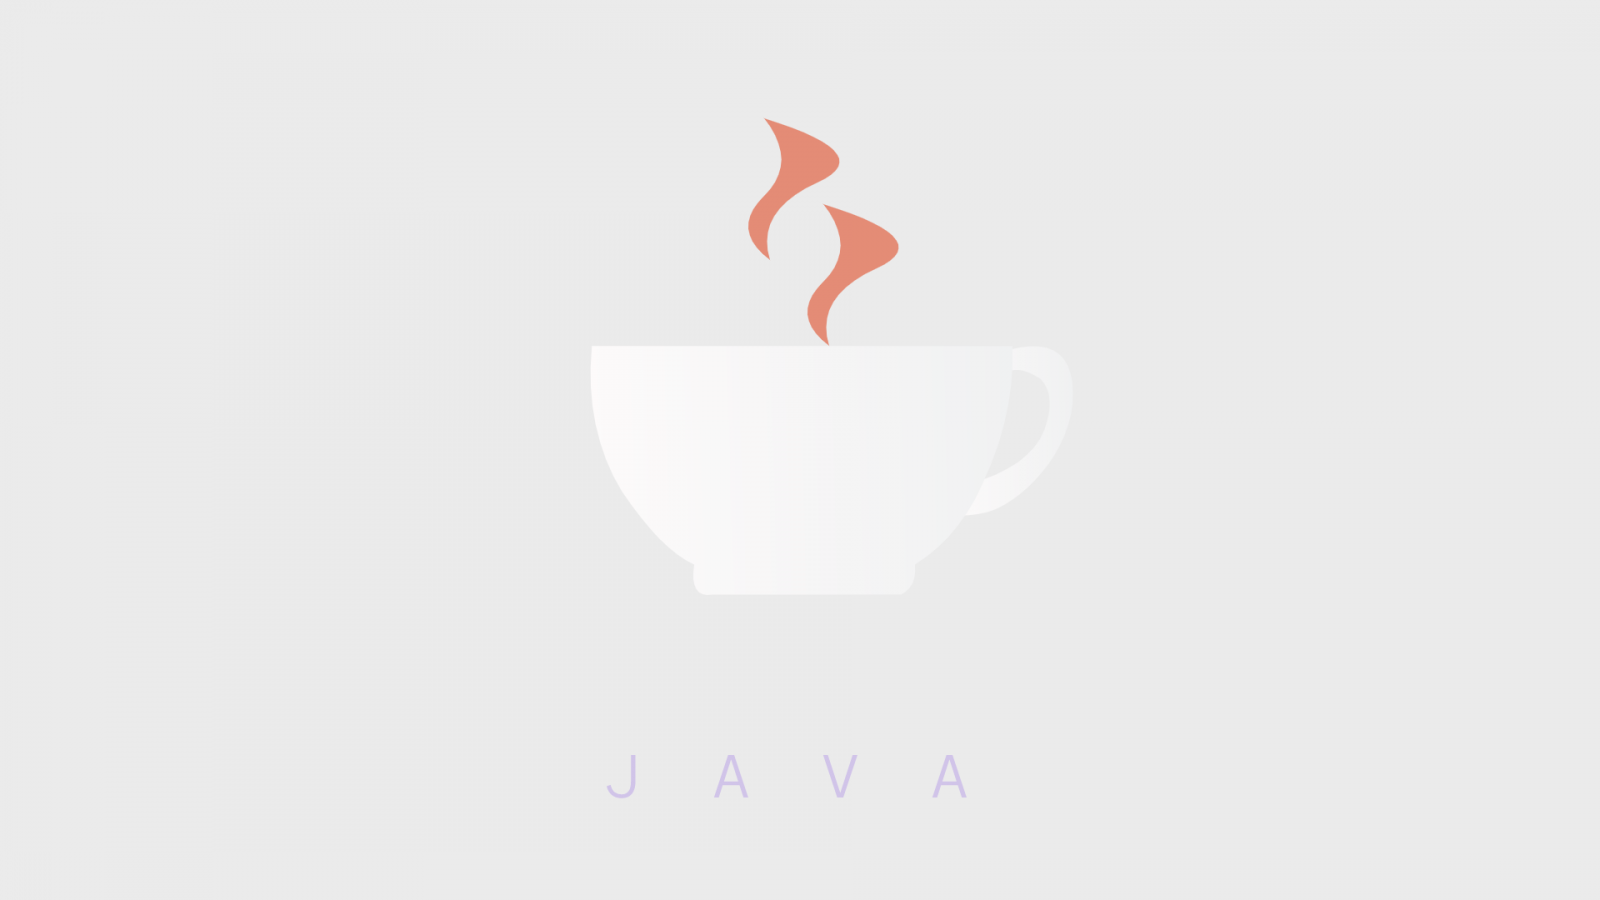 Wallpaper, Java, minimalism, programmers, programming language, cup, JavaScript, languages, developer, tech 1920x1080